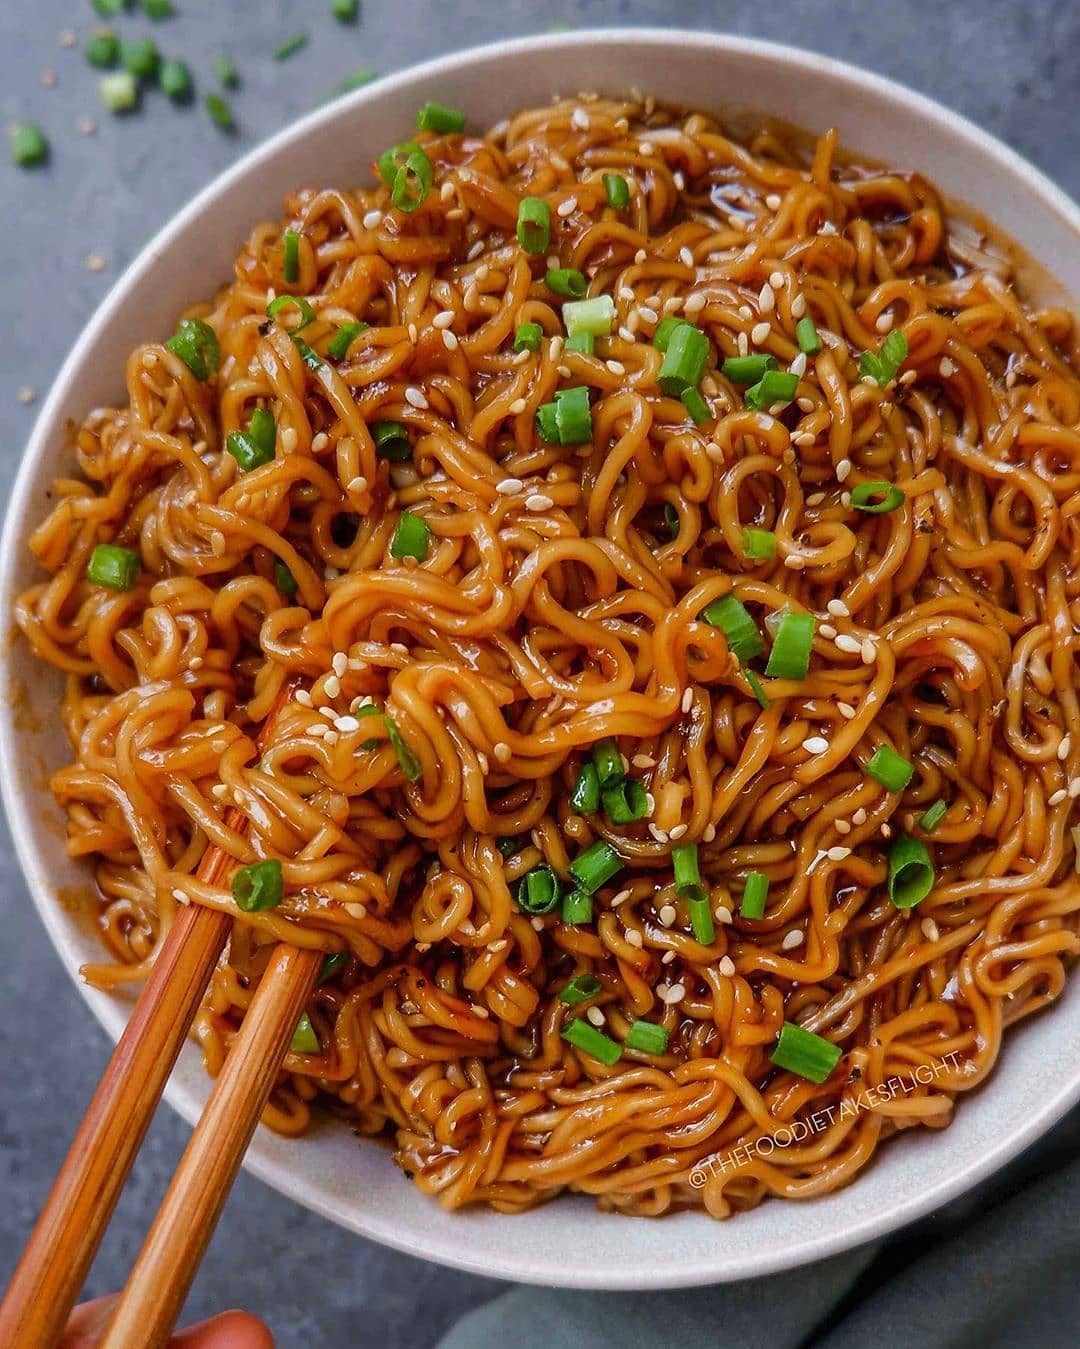 Easy Saucy Ramen Noodles